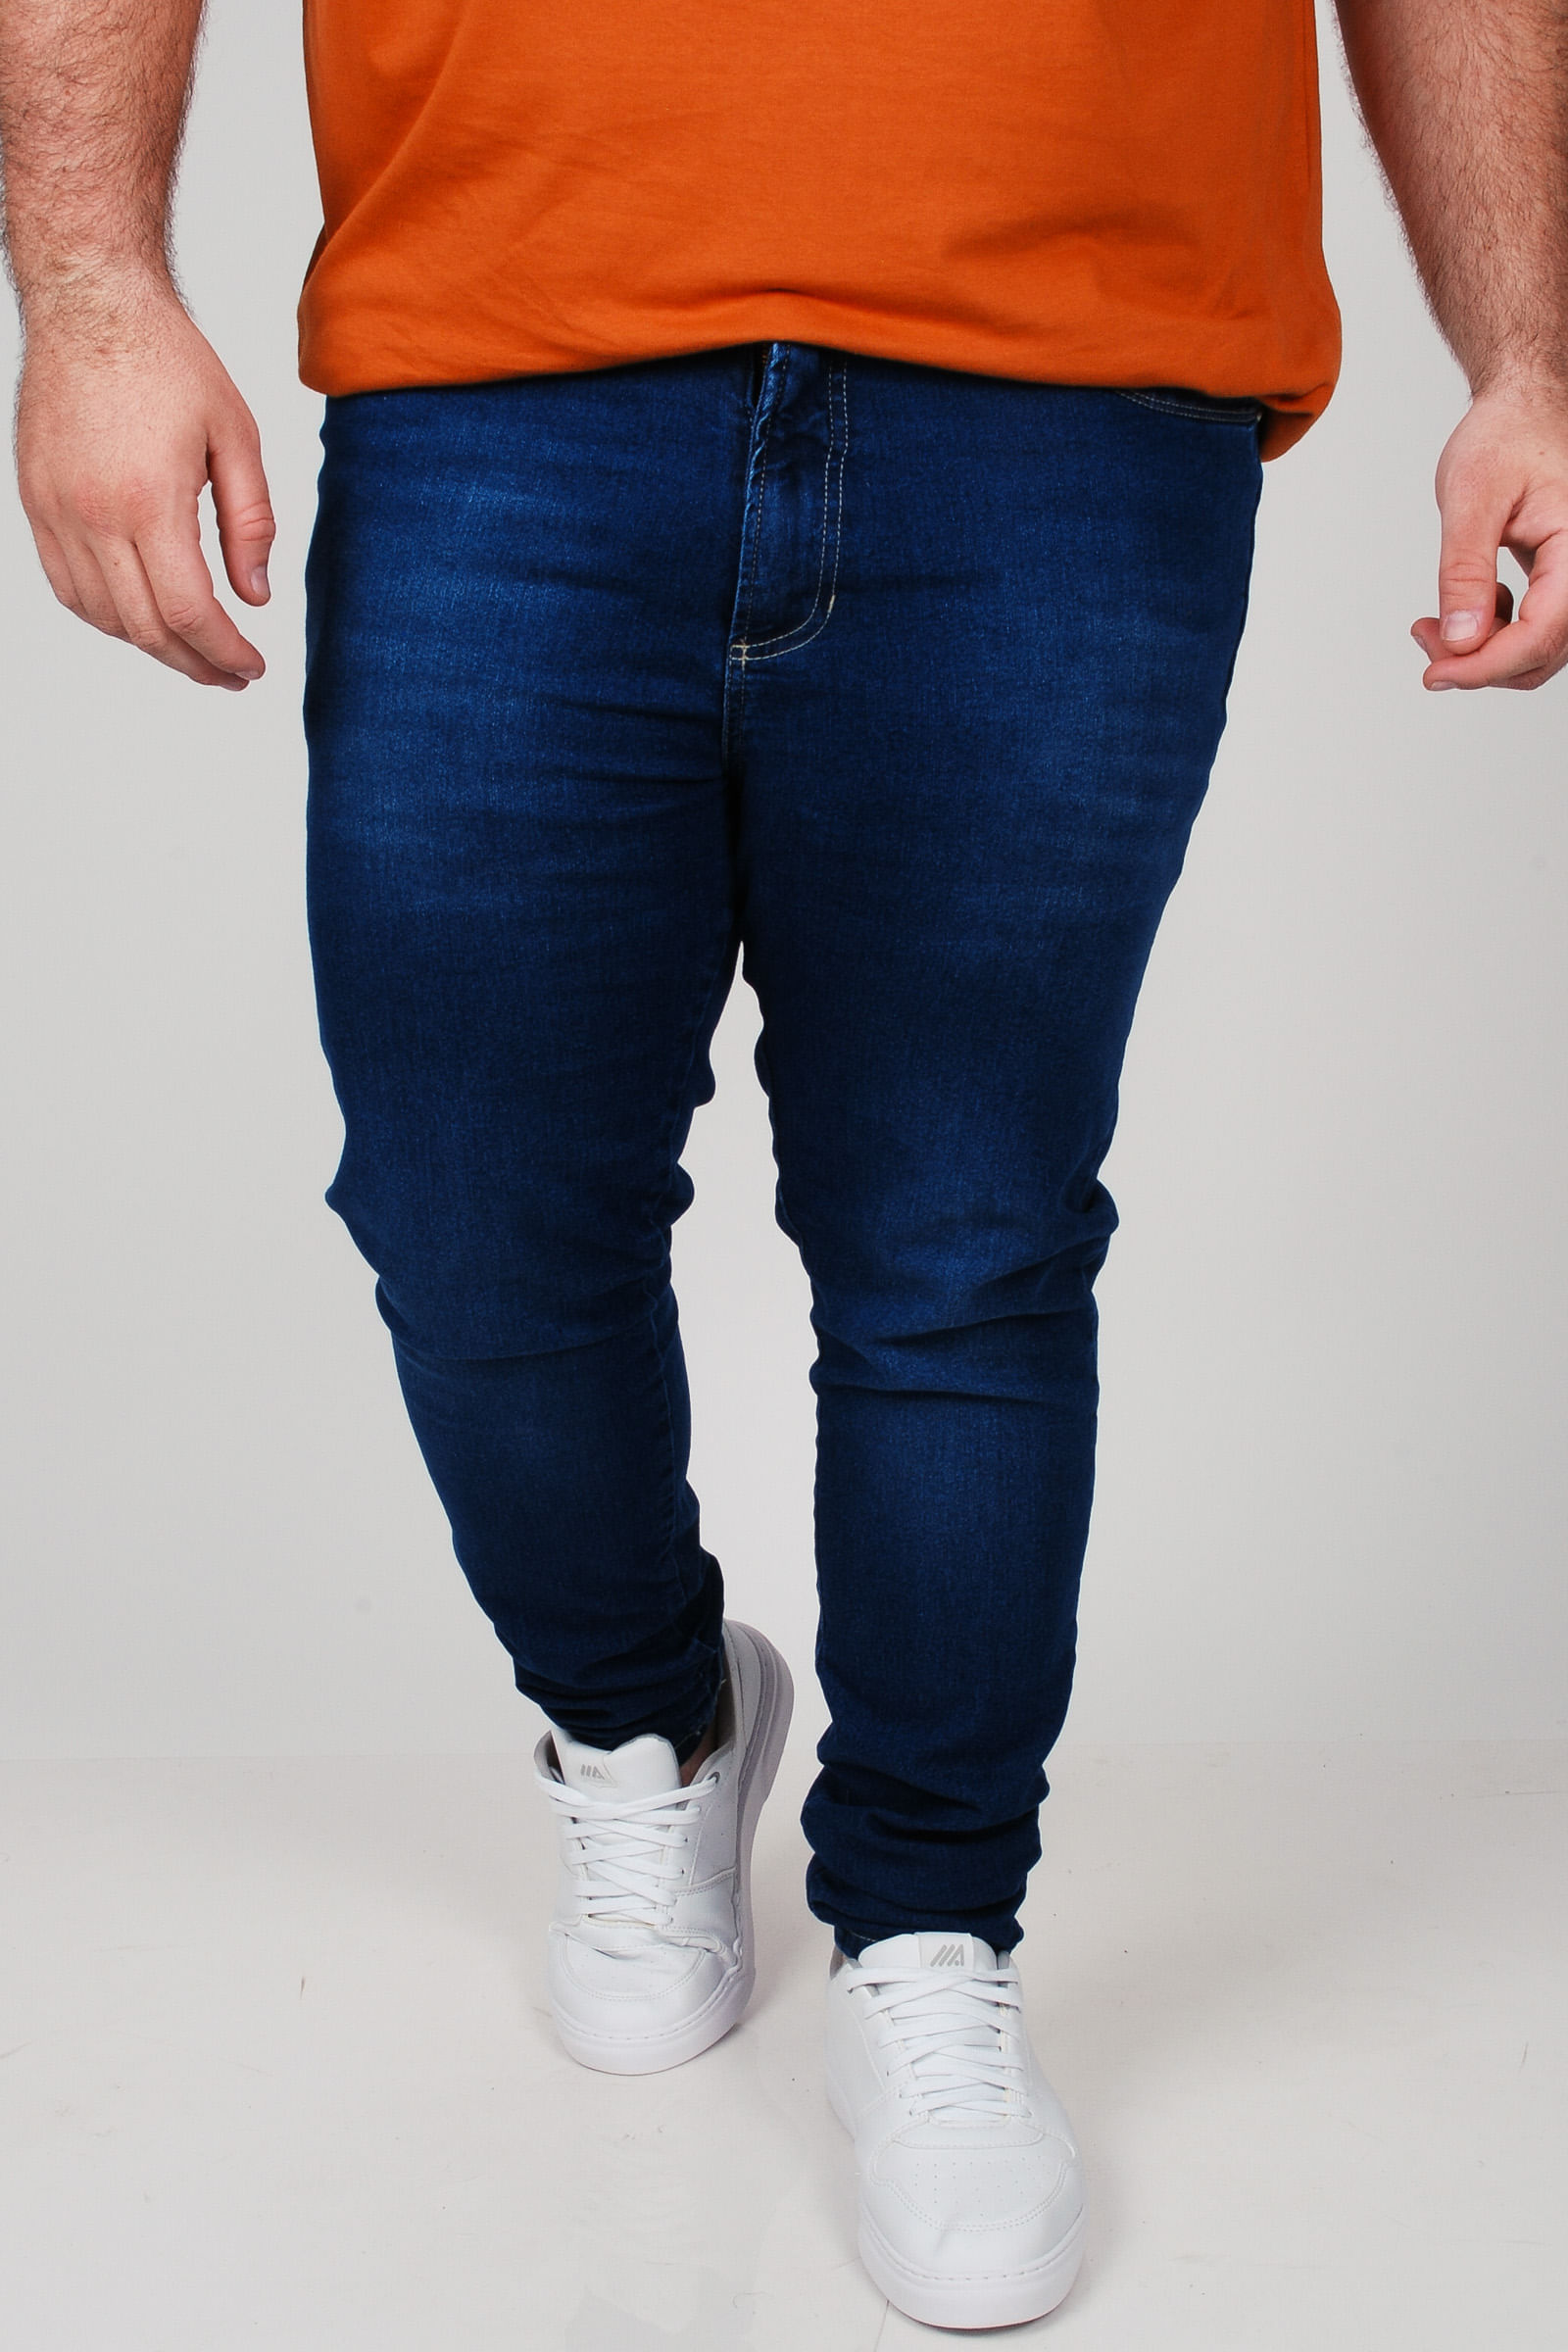 Calca-skinny-jeans-masculina-plus-size_0102_1